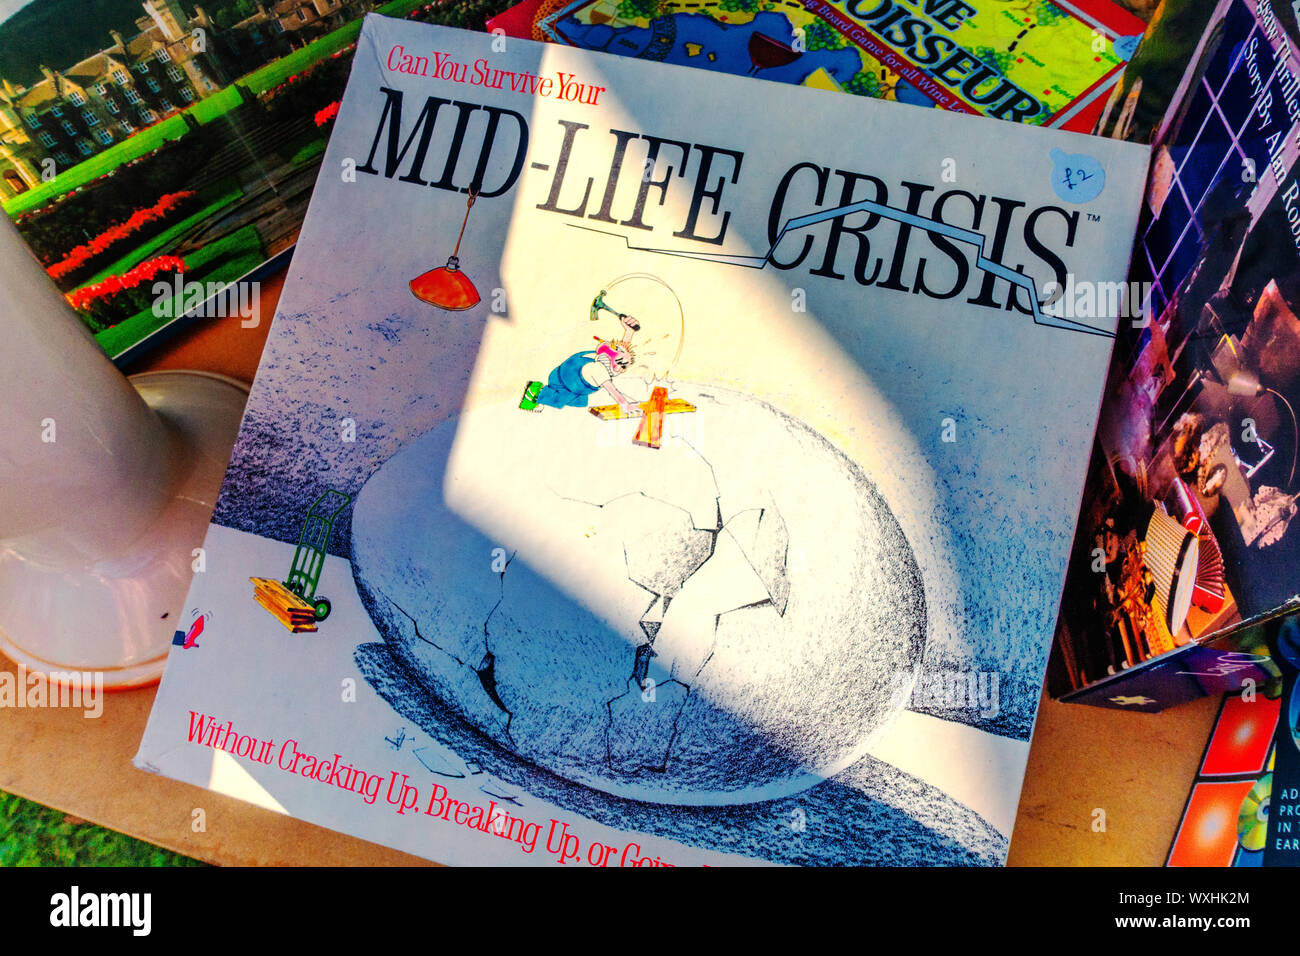 Mid Life Crisis book on sale Stock Photo